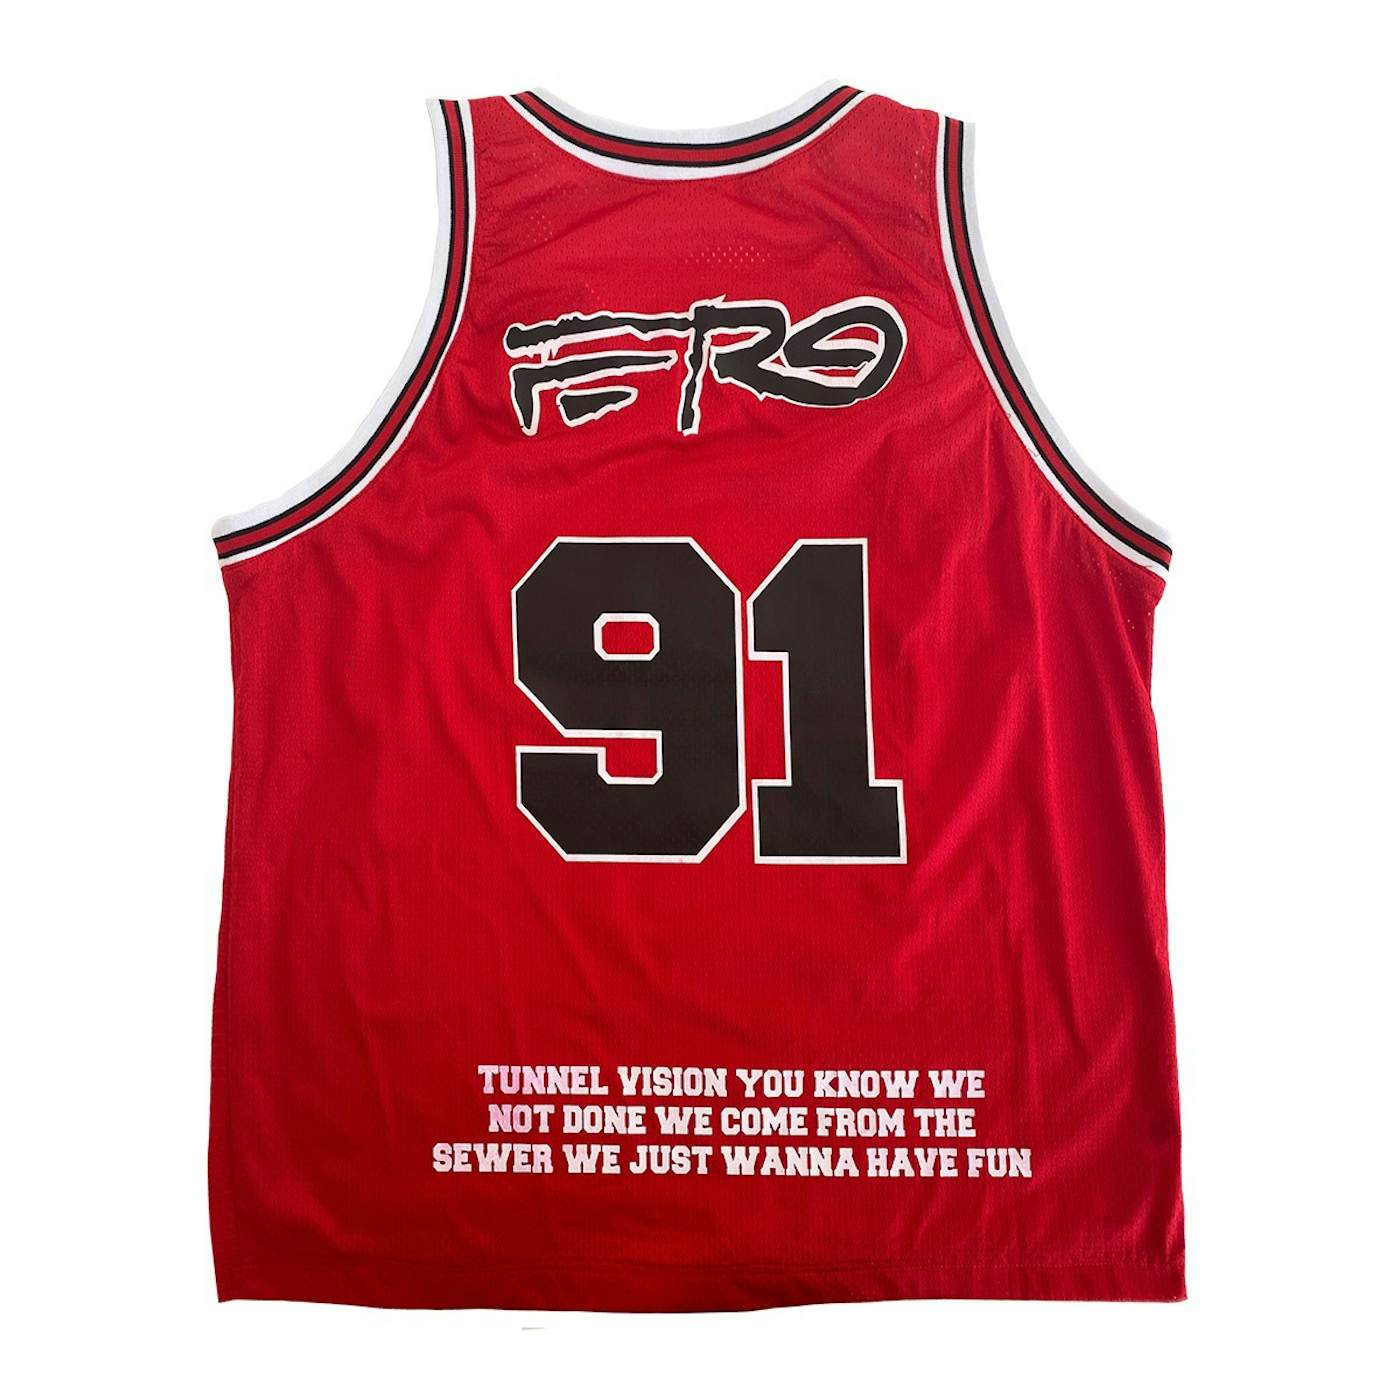 A$AP Ferg Floor Seats II Basketball Jersey